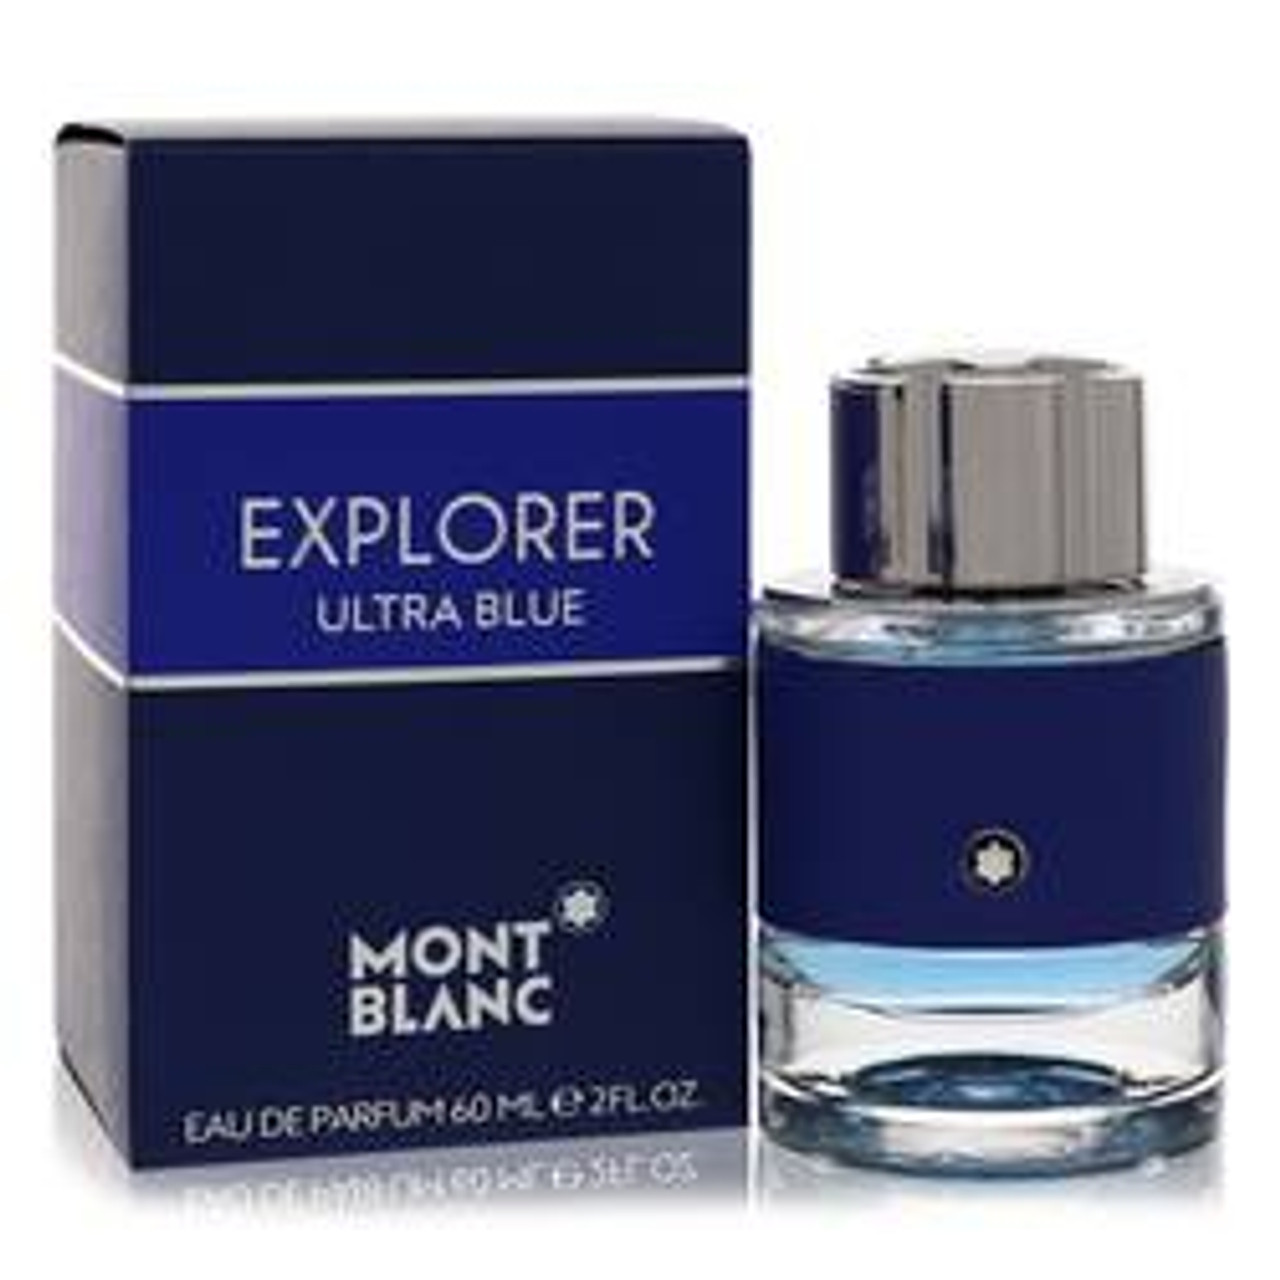 Montblanc Explorer Ultra Blue Cologne By Mont Blanc Eau De Parfum Spray 2 oz for Men - [From 96.00 - Choose pk Qty ] - *Ships from Miami